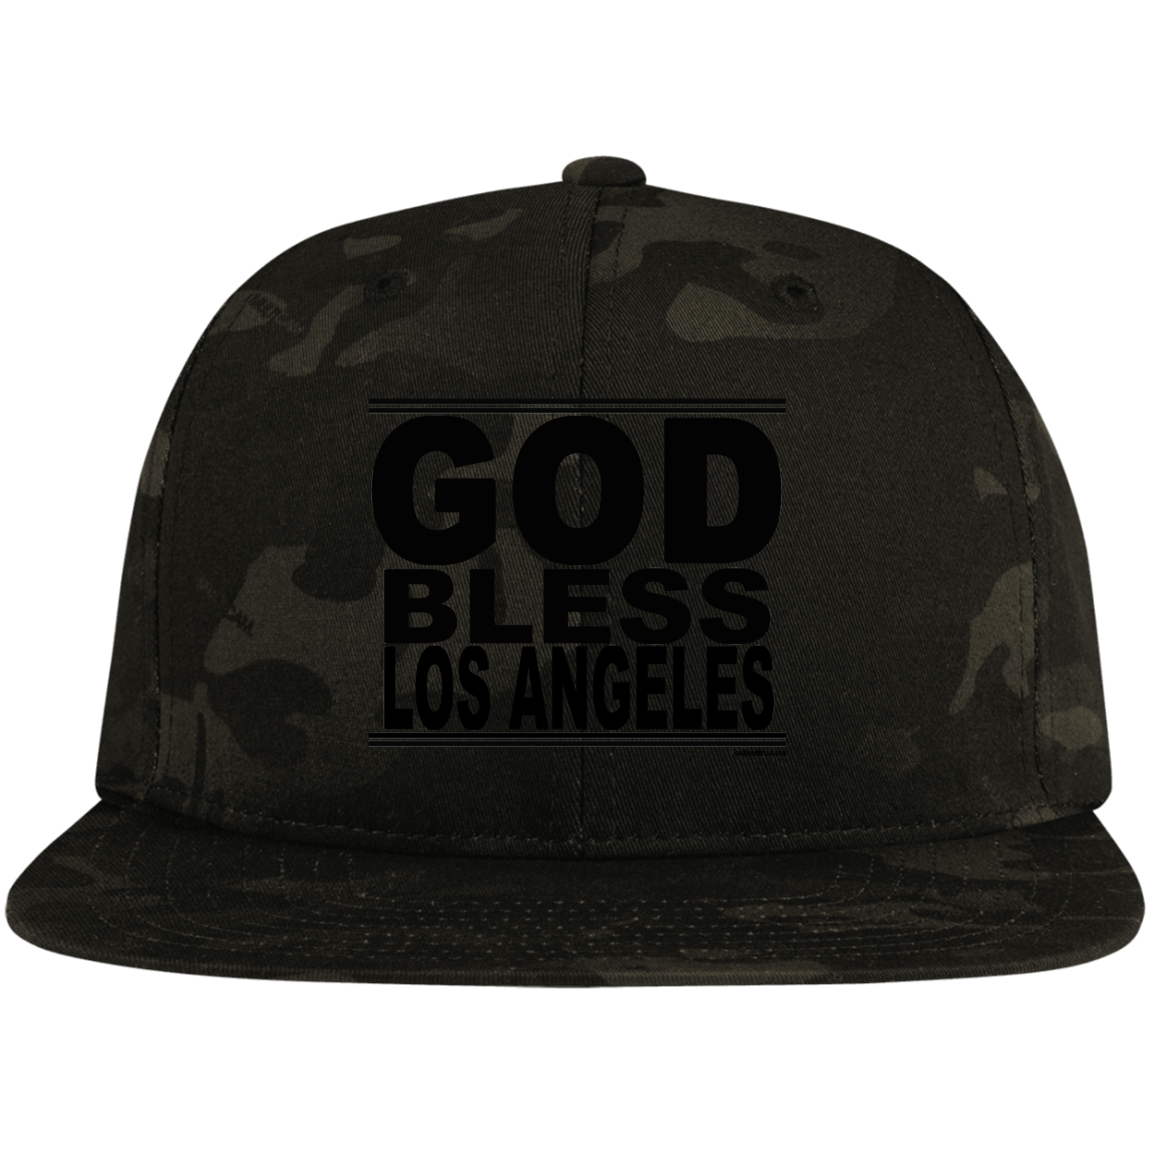 #GodBlessLosAngeles - Snapback Hat